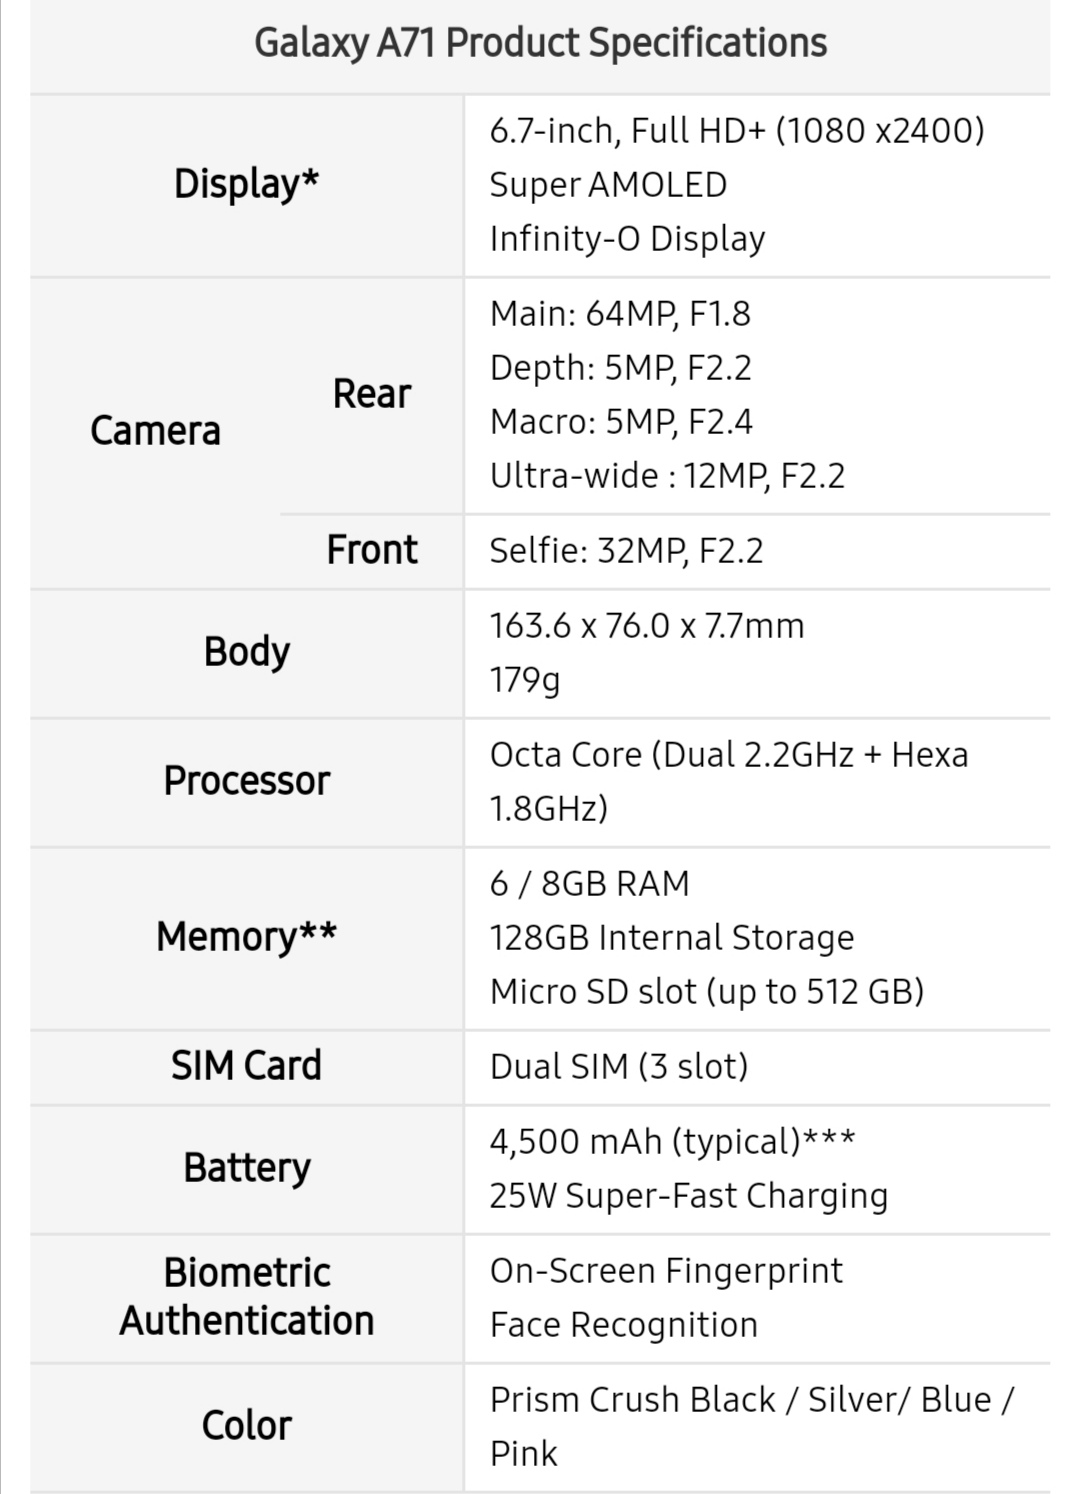 Samsung A51 Параметры